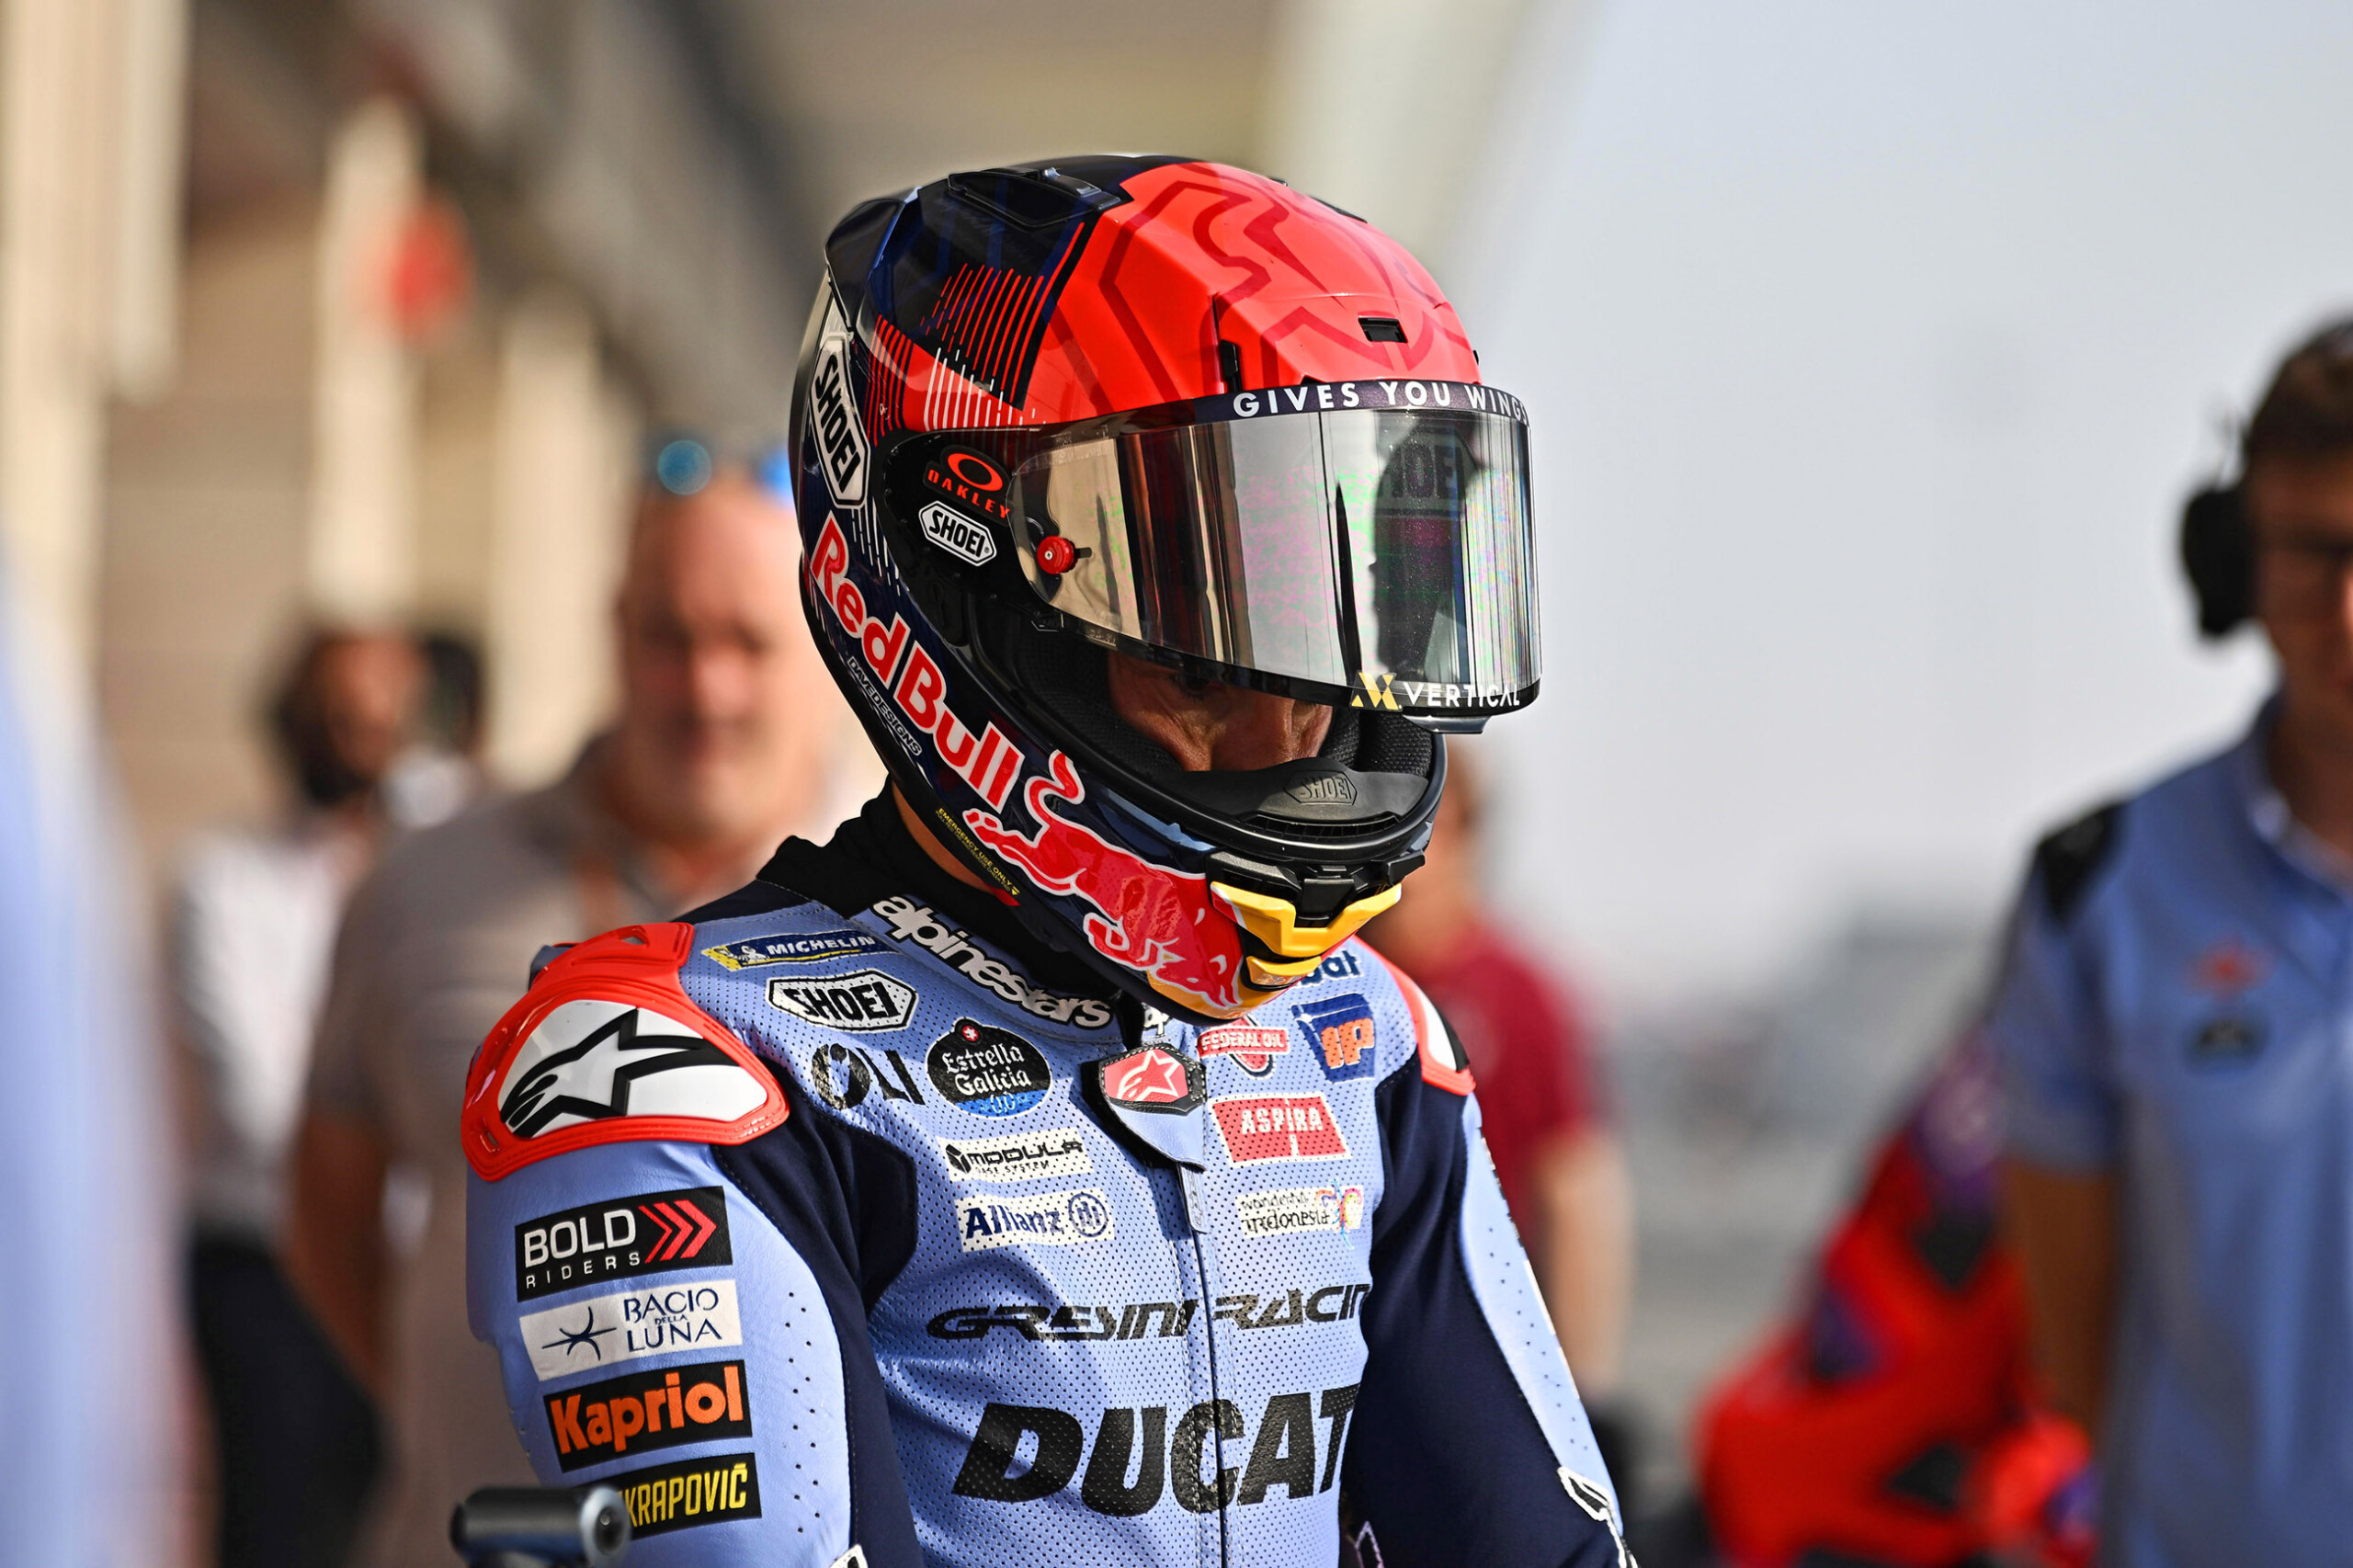 Marc Marquez SPA 
Gresini Racing MotoGP 
Ducati
MotoGP